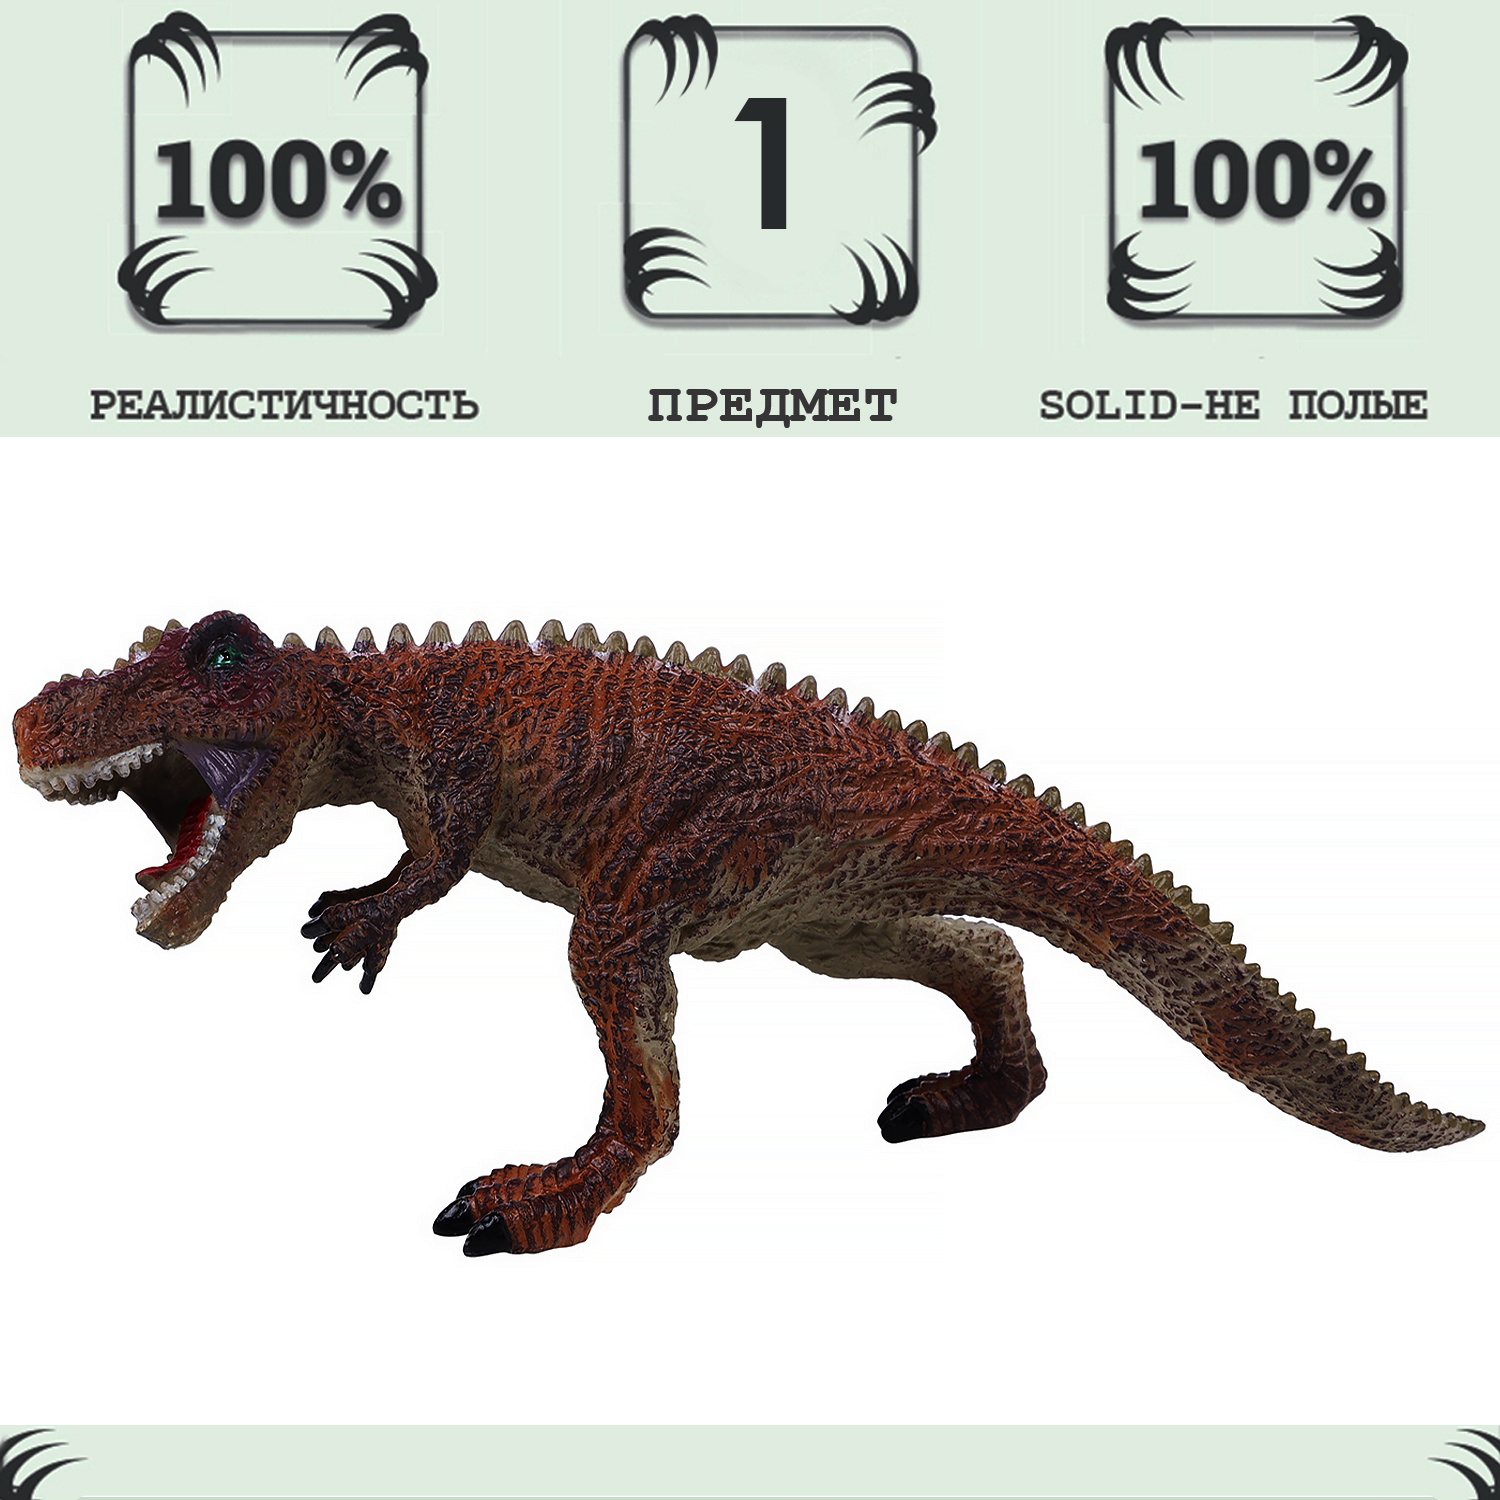 Фигурка Masai Mara динозавр серии Мир динозавров - Тираннозавр (Тирекс) MM216-057 игрушка динозавр серии мир динозавров masai mara трицератопс фигурка 30 см mm206 397